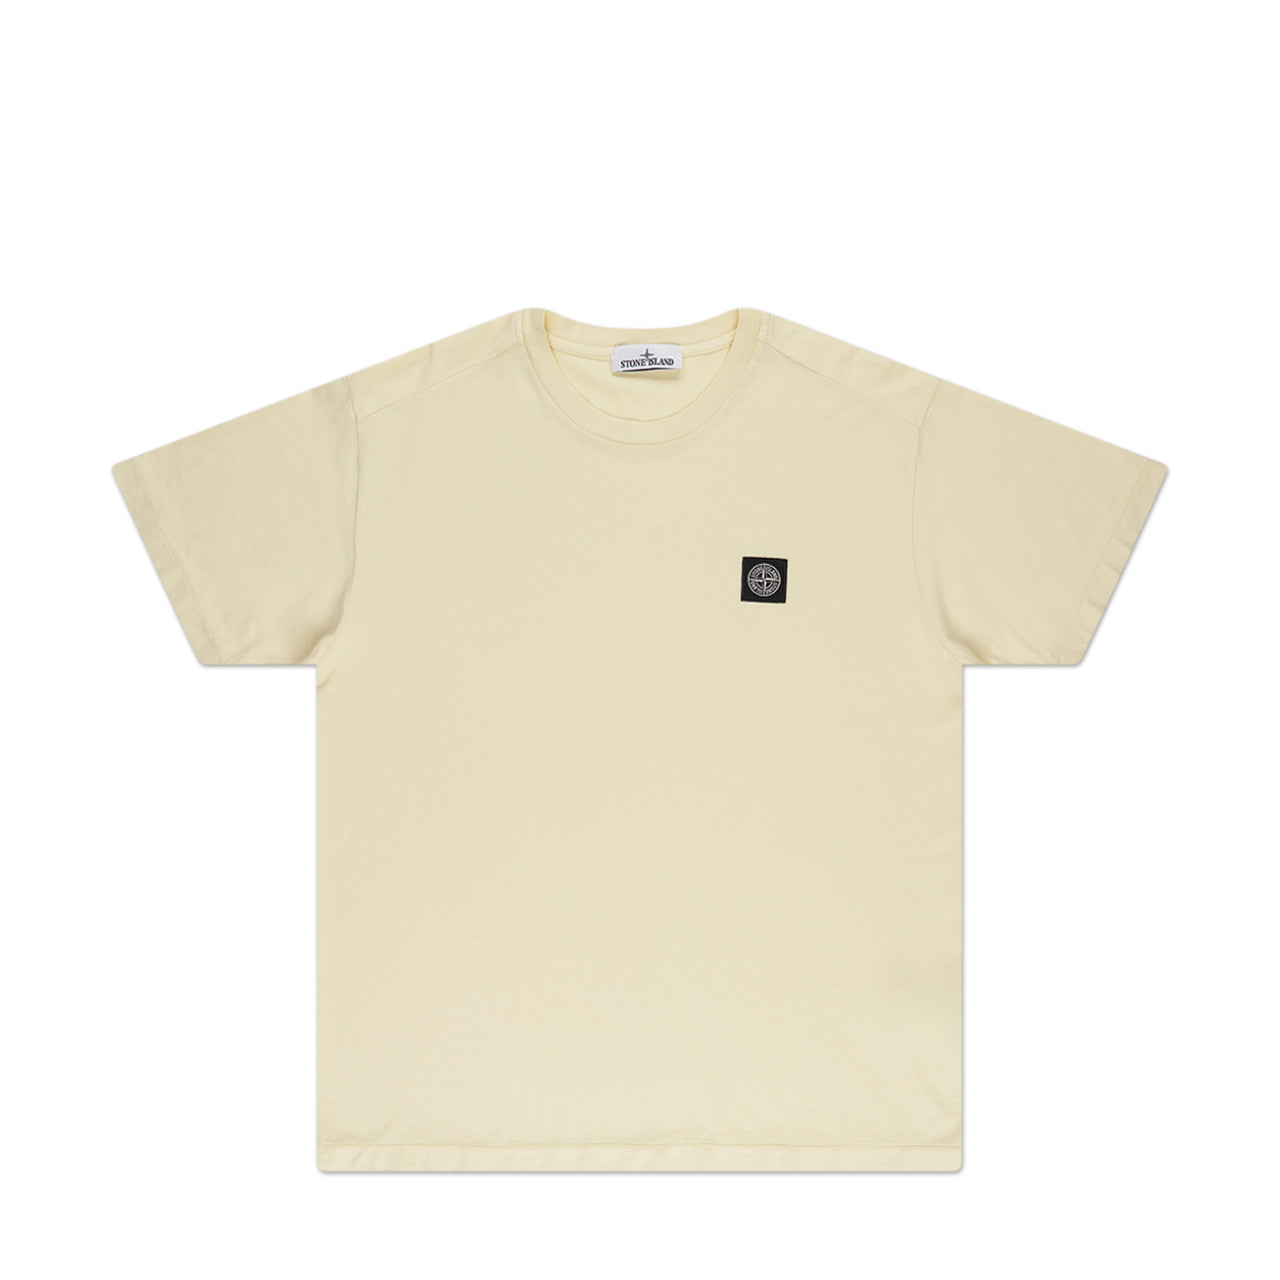 stone island compass t-shirt (beige)